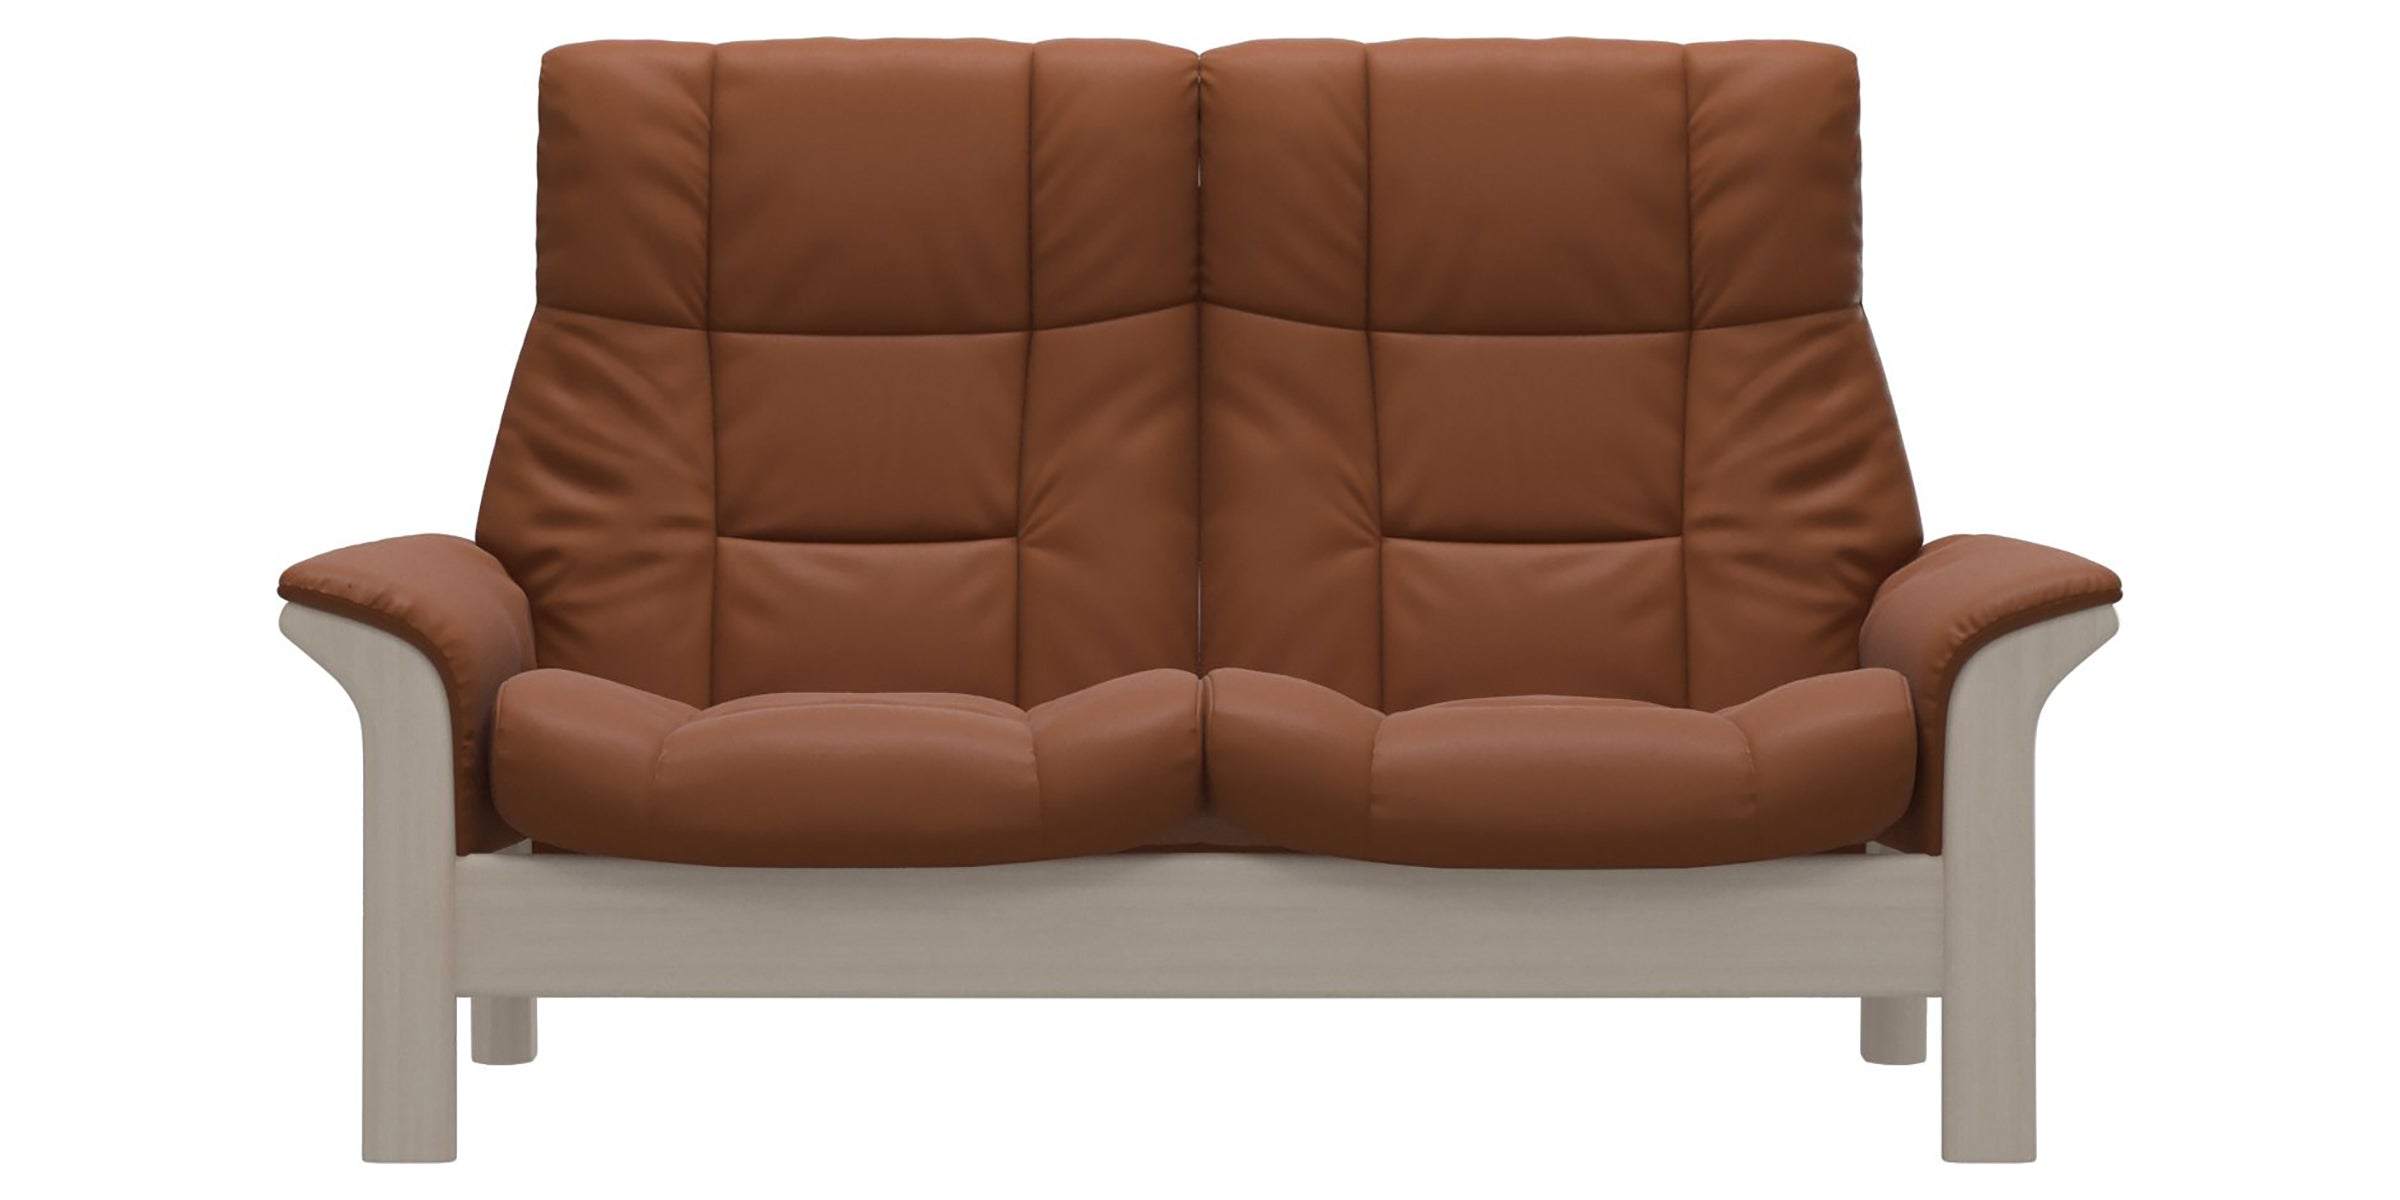 Paloma Leather New Cognac and Whitewash Base | Stressless Buckingham 2-Seater High Back Sofa | Valley Ridge Furniture